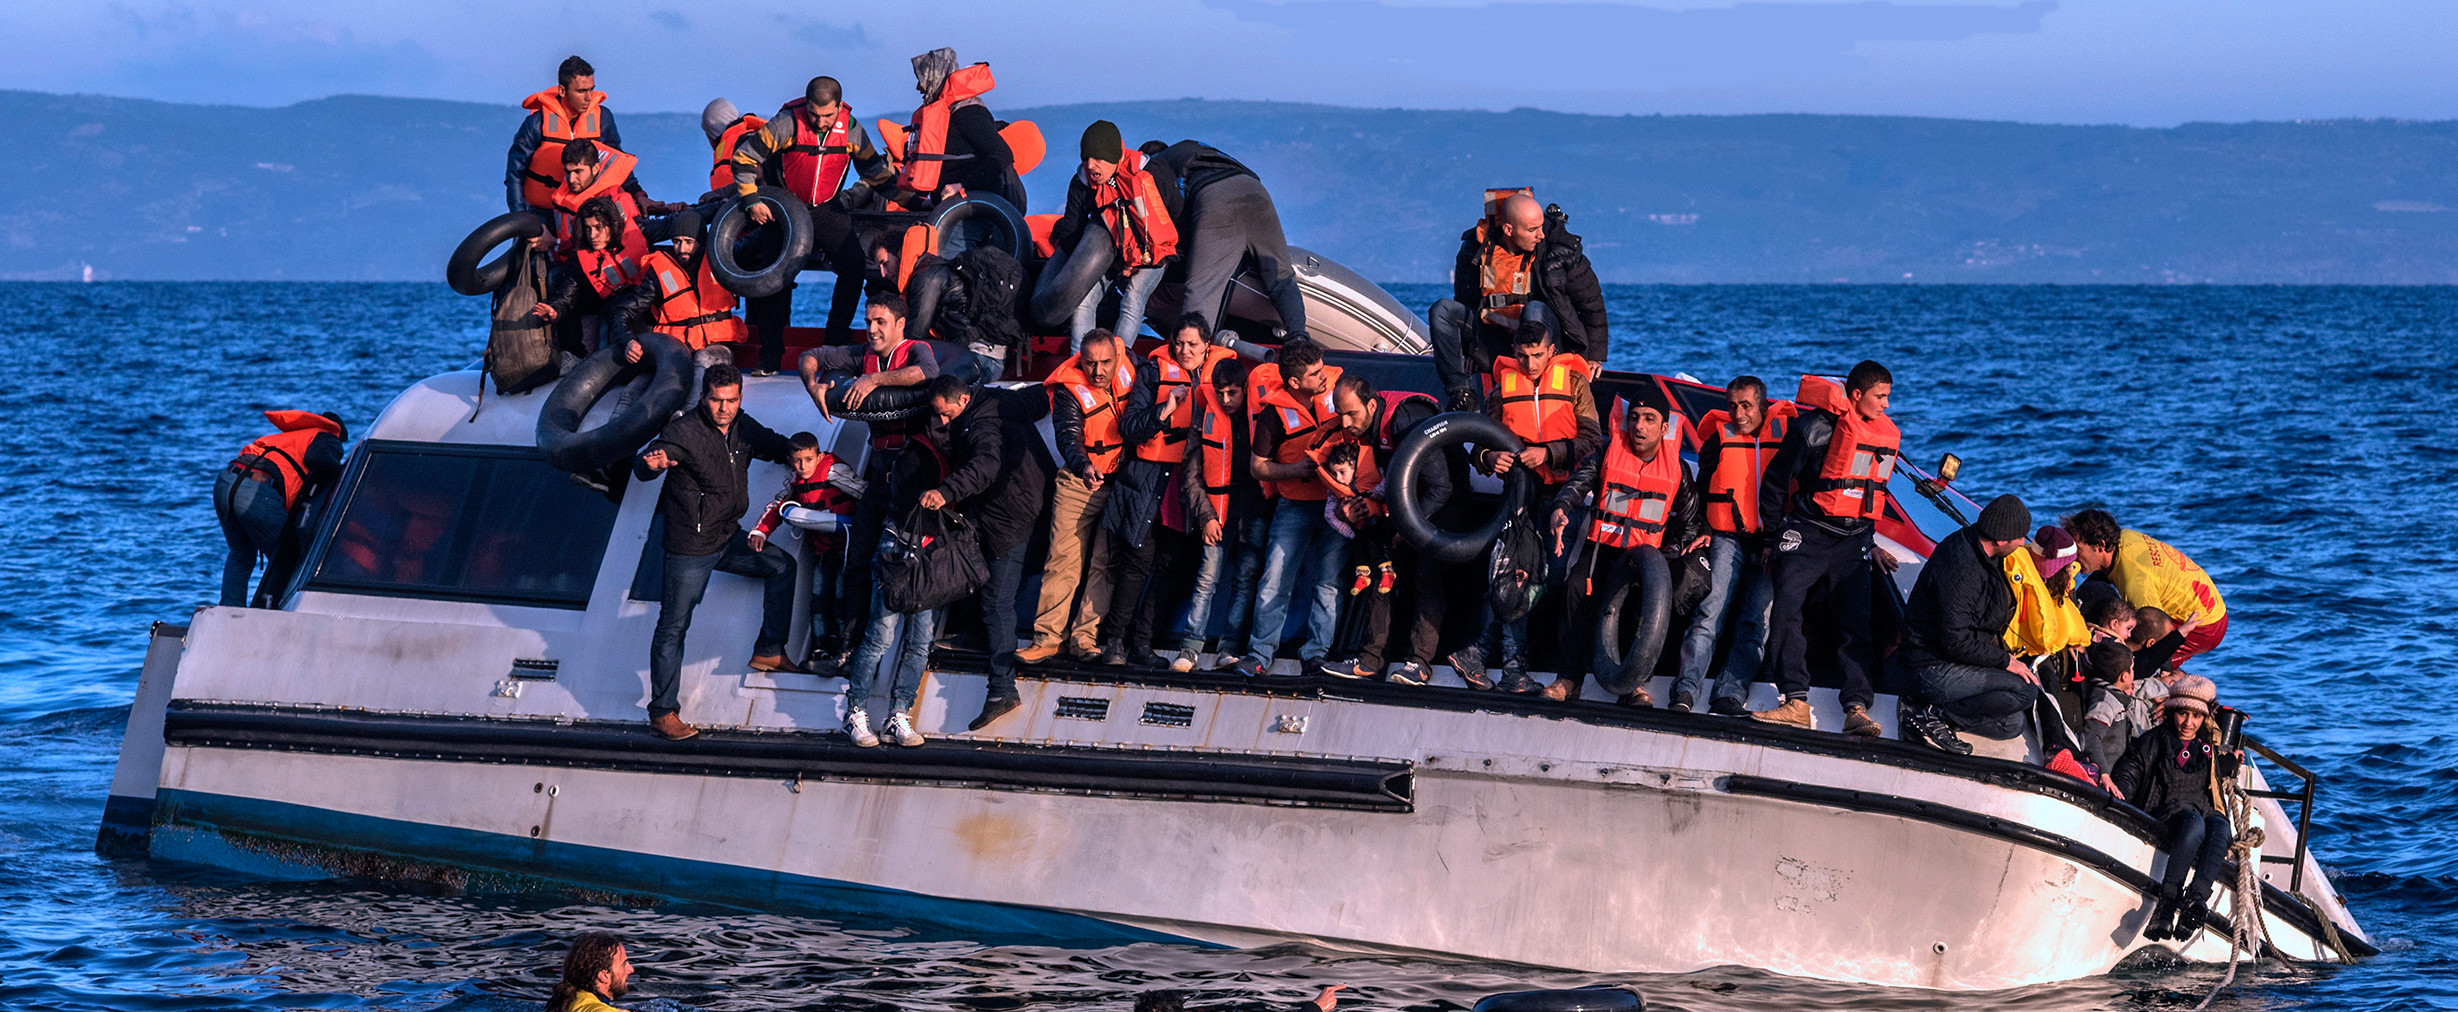 Refugiats barca